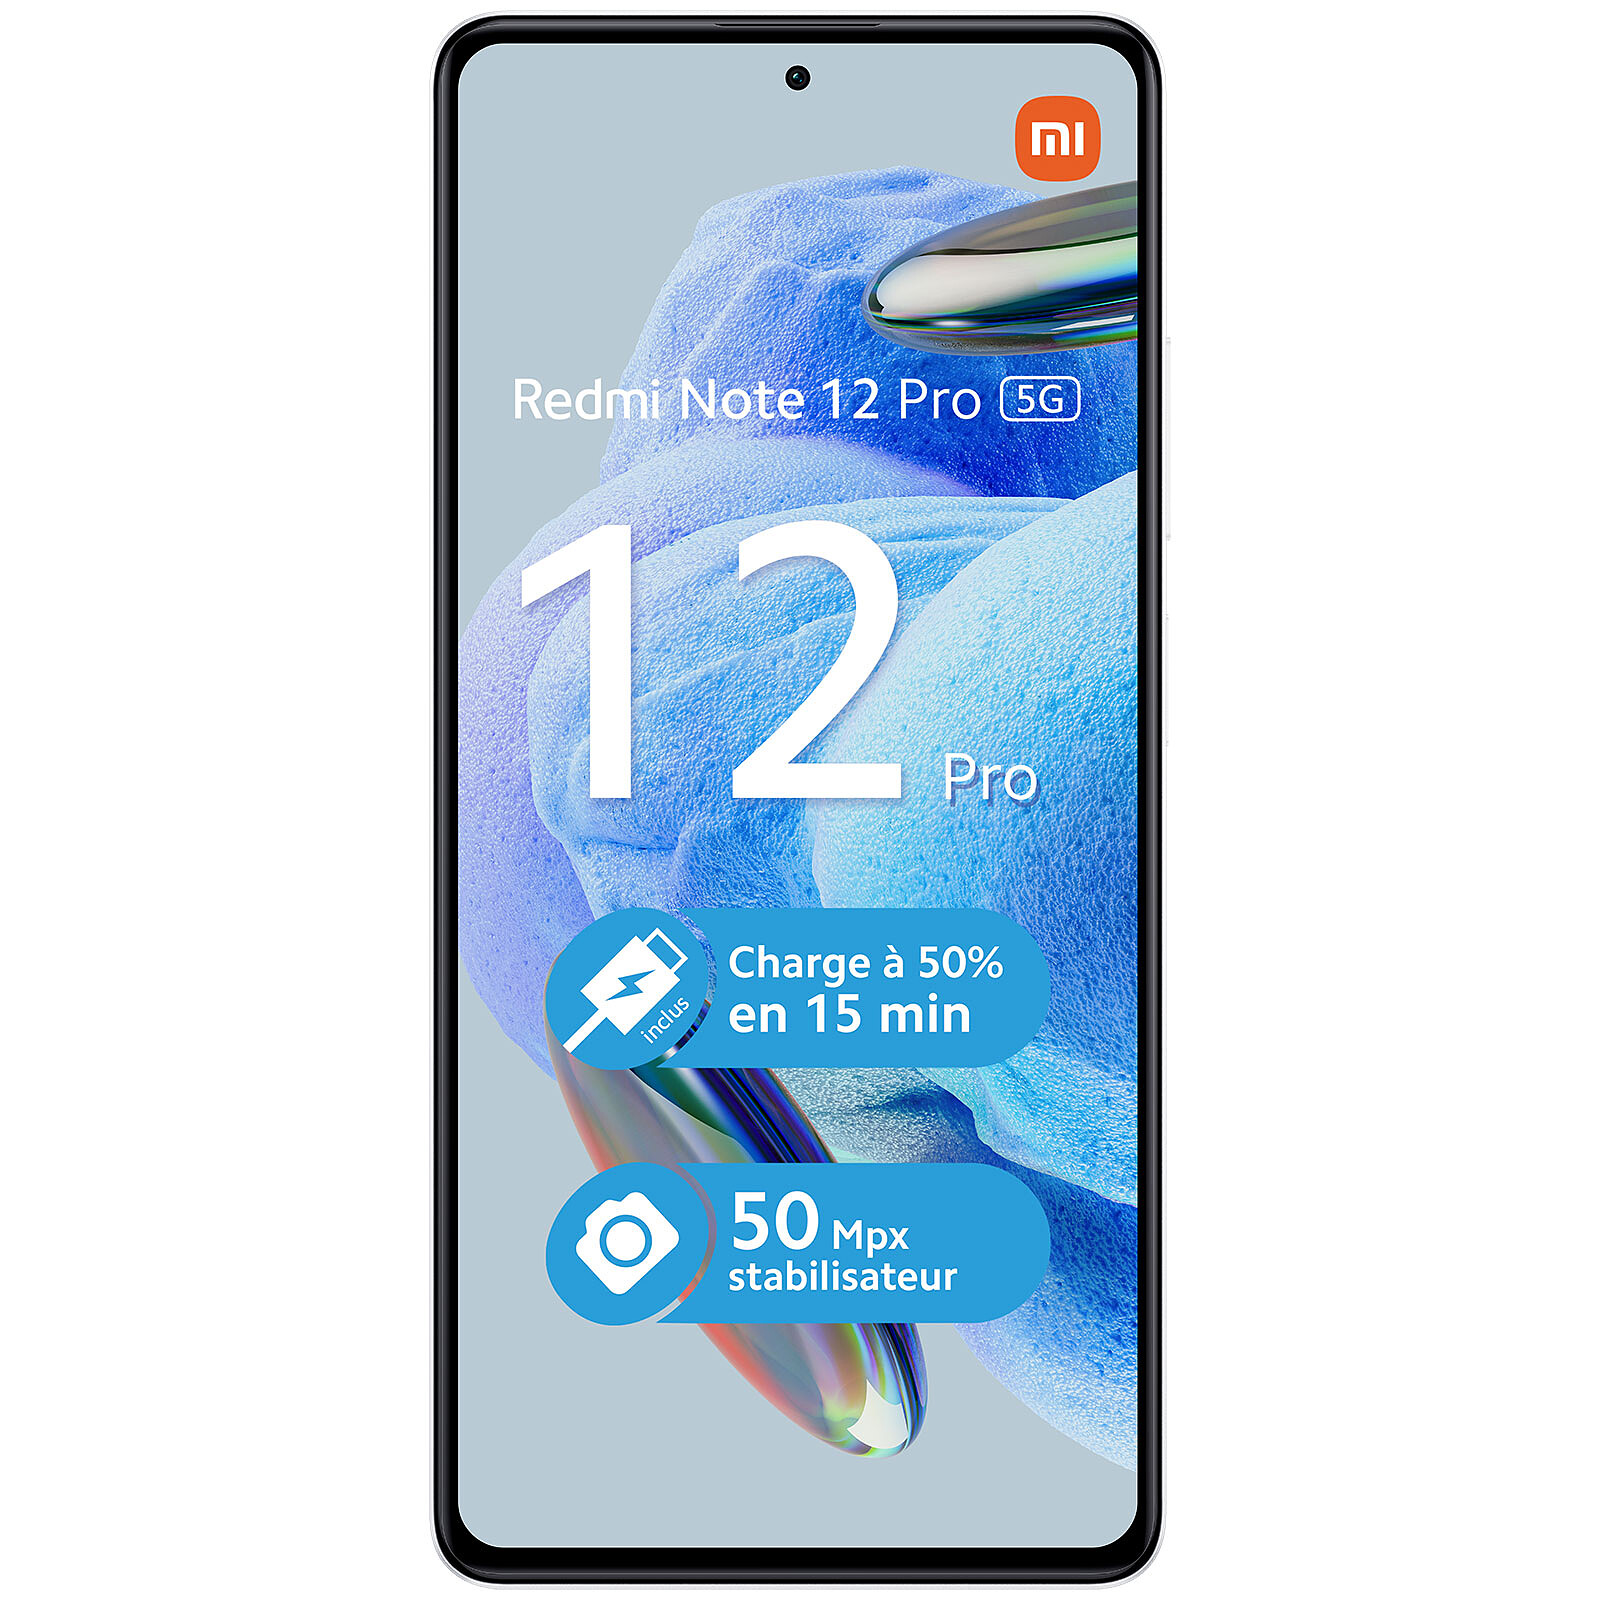 Xiaomi Redmi 12 5G Blue (4GB / 128GB) - Mobile phone & smartphone - LDLC  3-year warranty